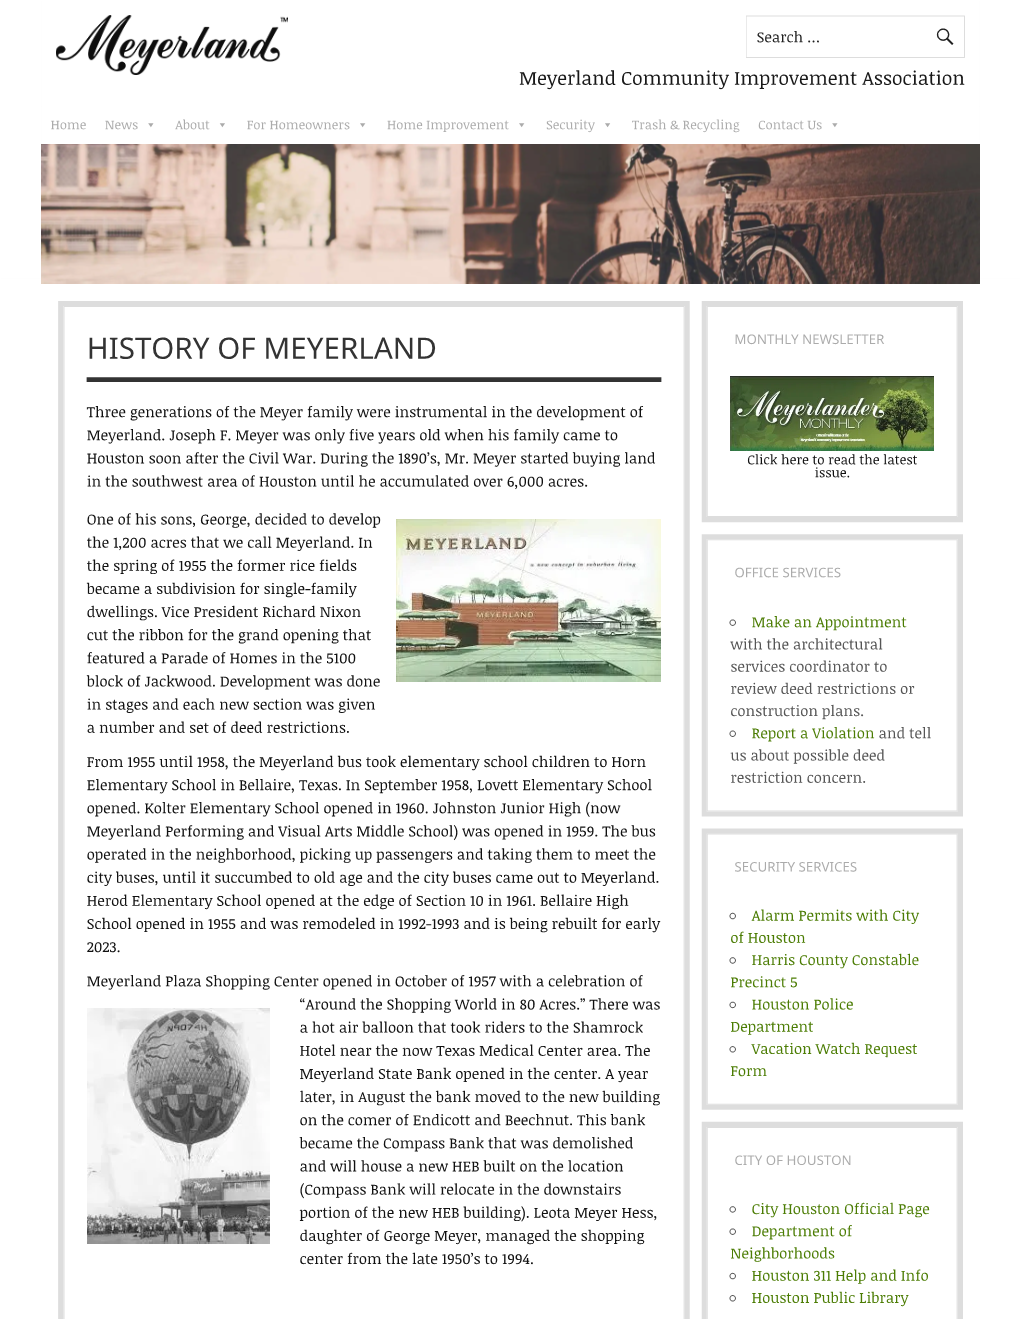 History of Meyerland Monthly Newsletter